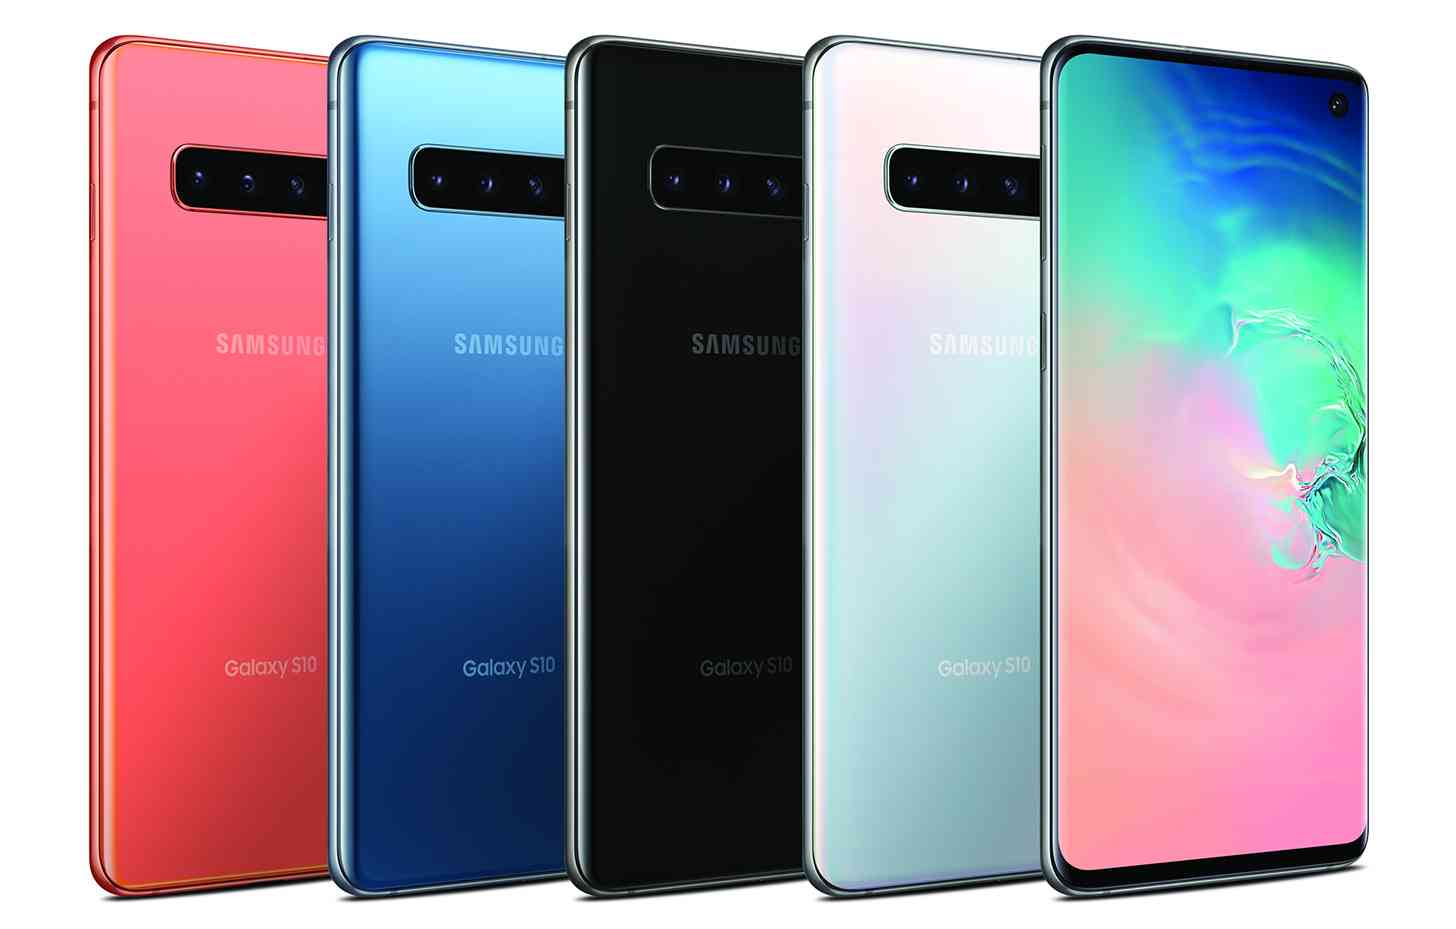 Samsung Galaxy S10 colors